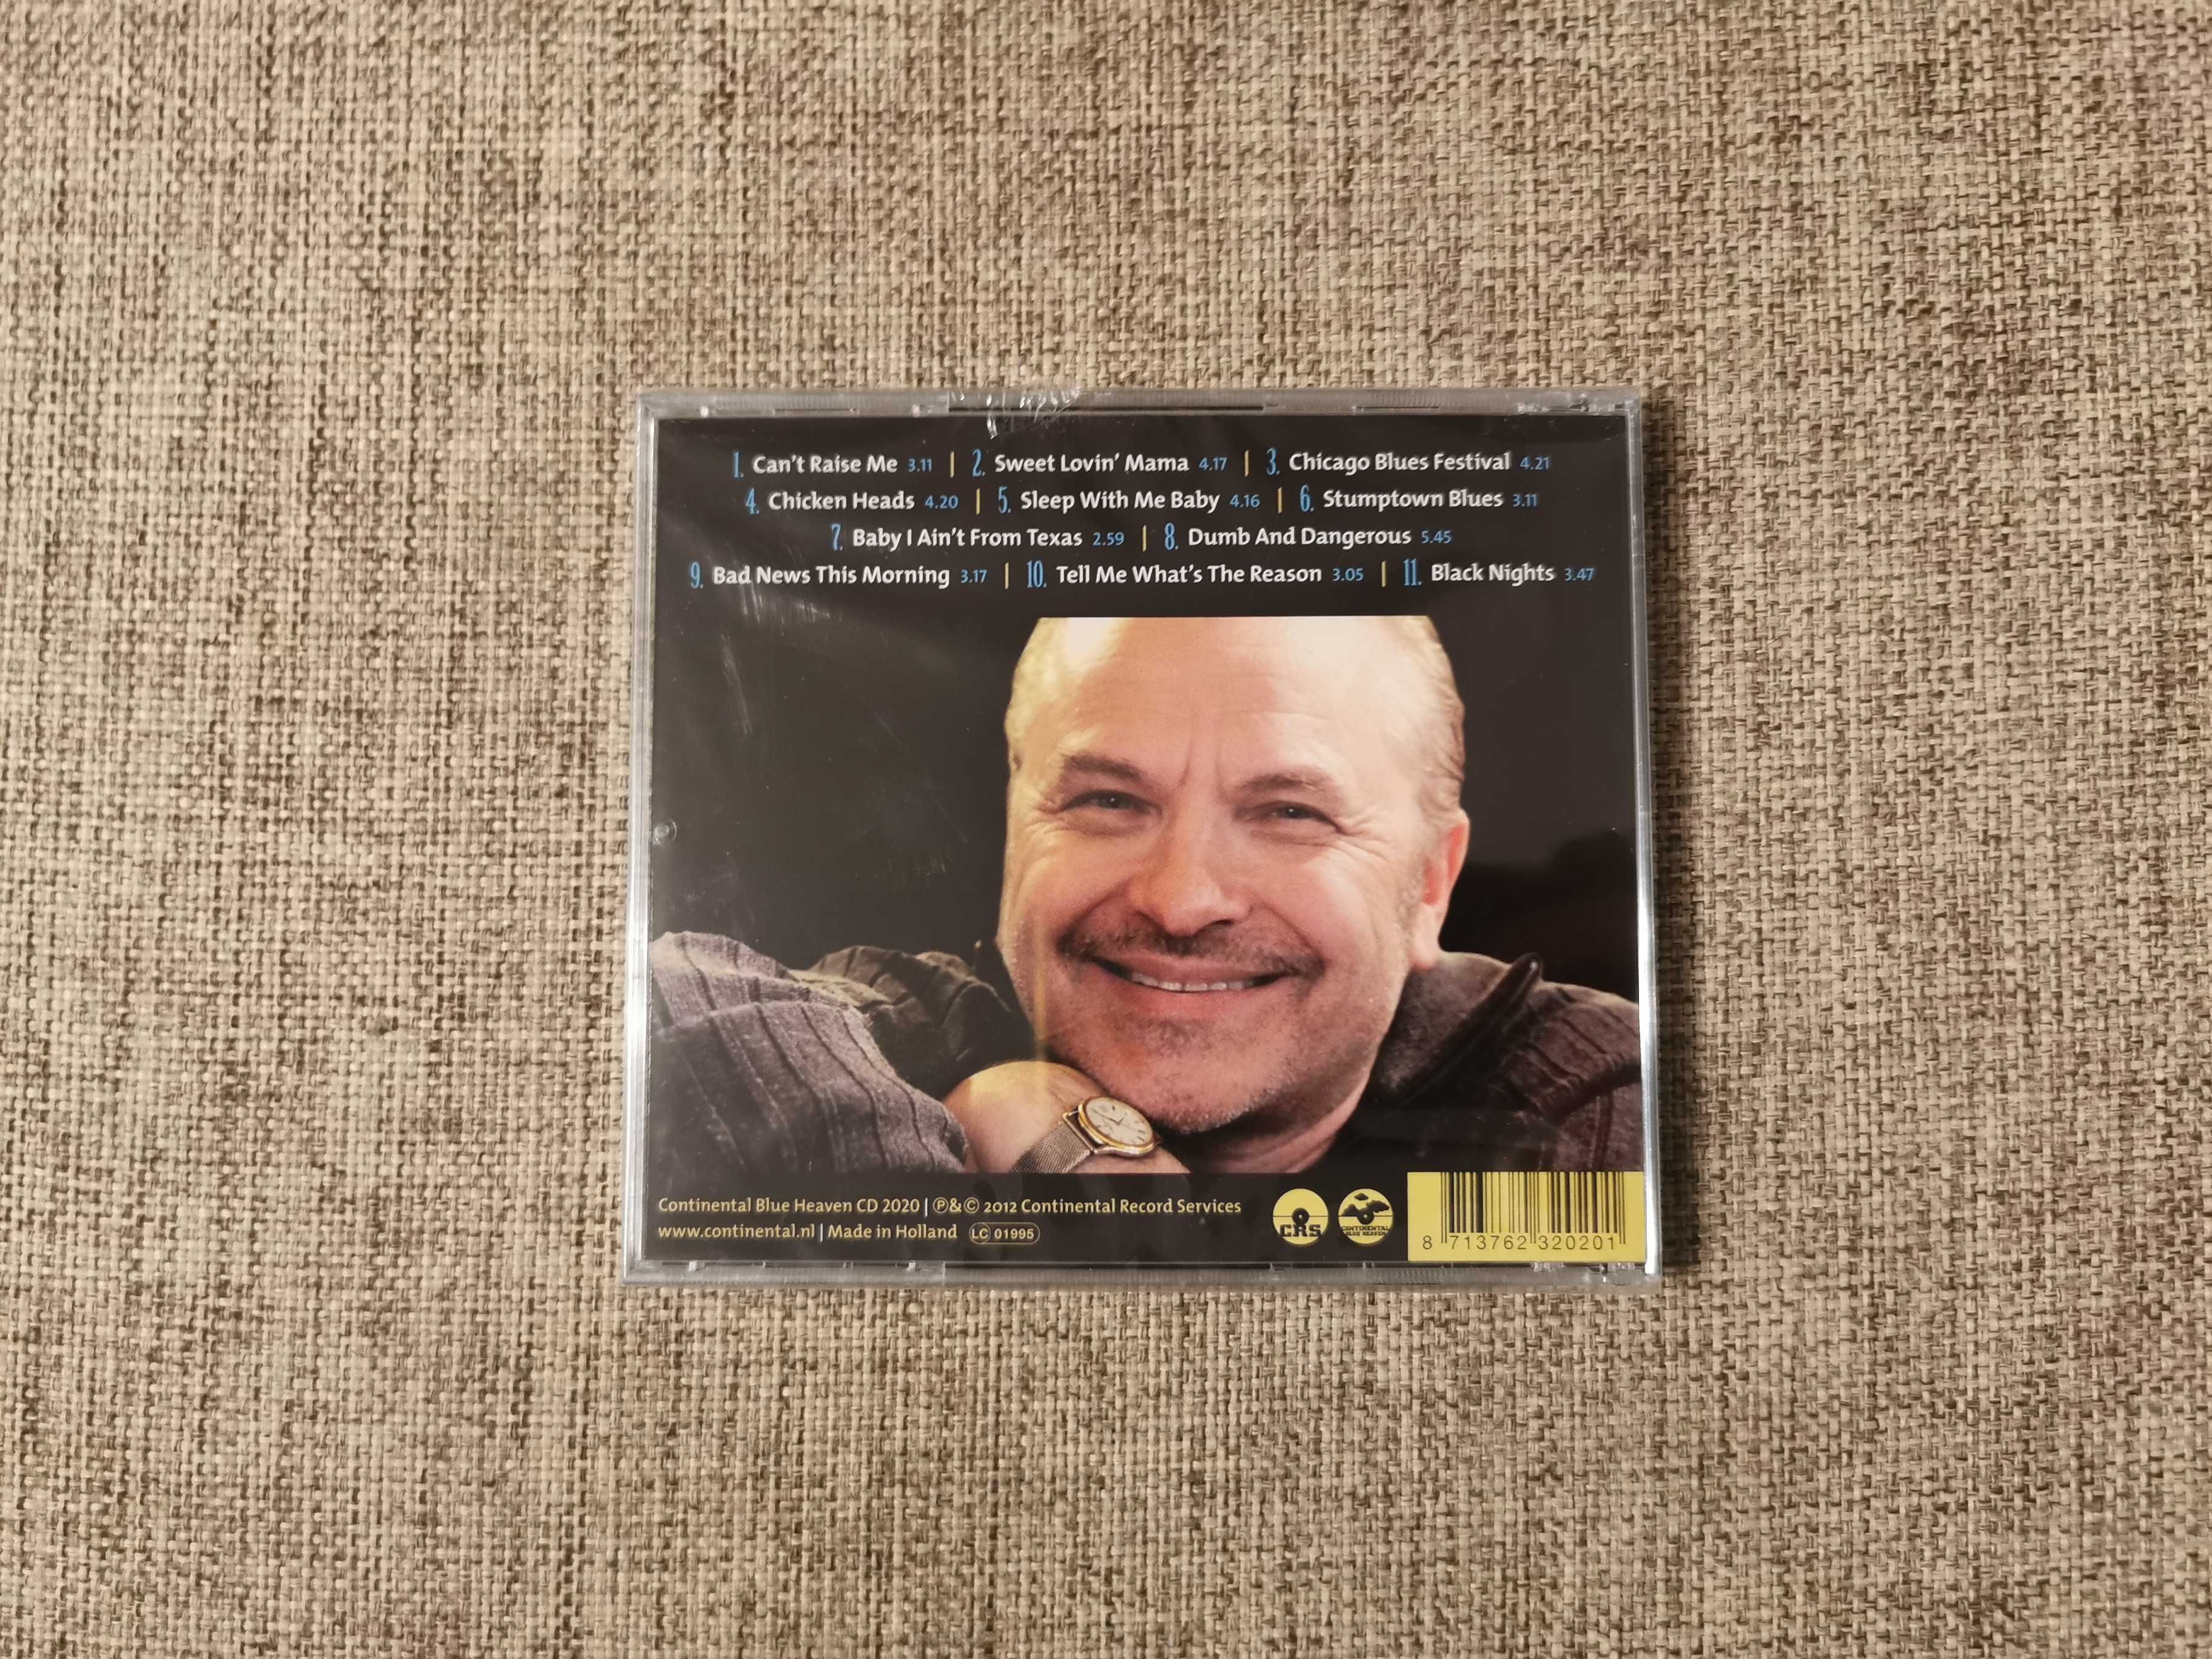 Muzyka CD - Franck Goldwasser - Can't Raise Me Album